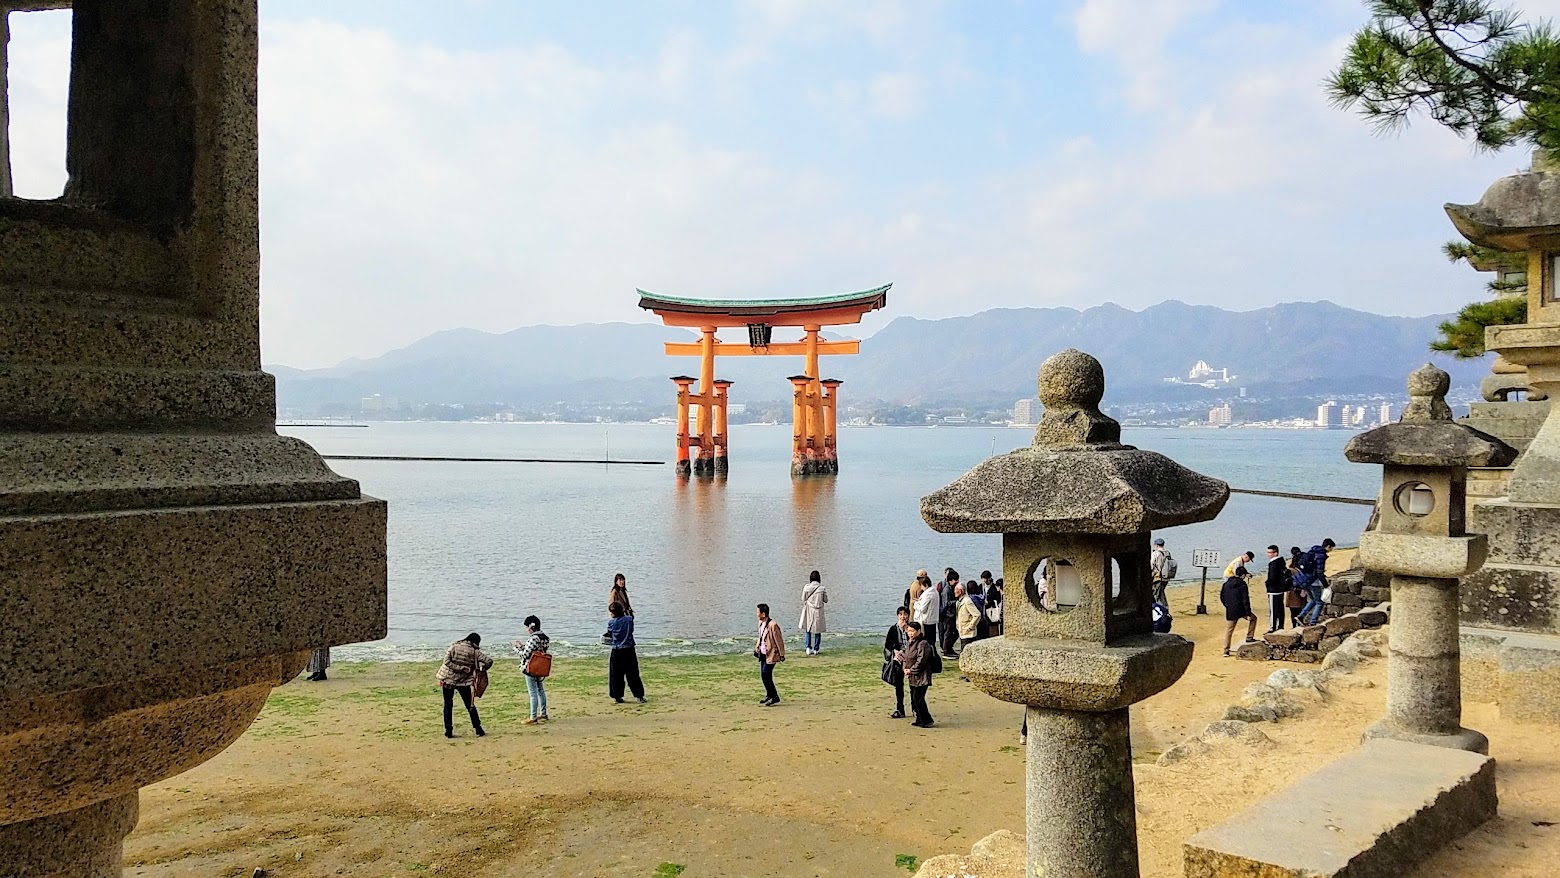 Hiroshima Day trip to Miyajima, the famous red Itsukushima Floating Torii Gate